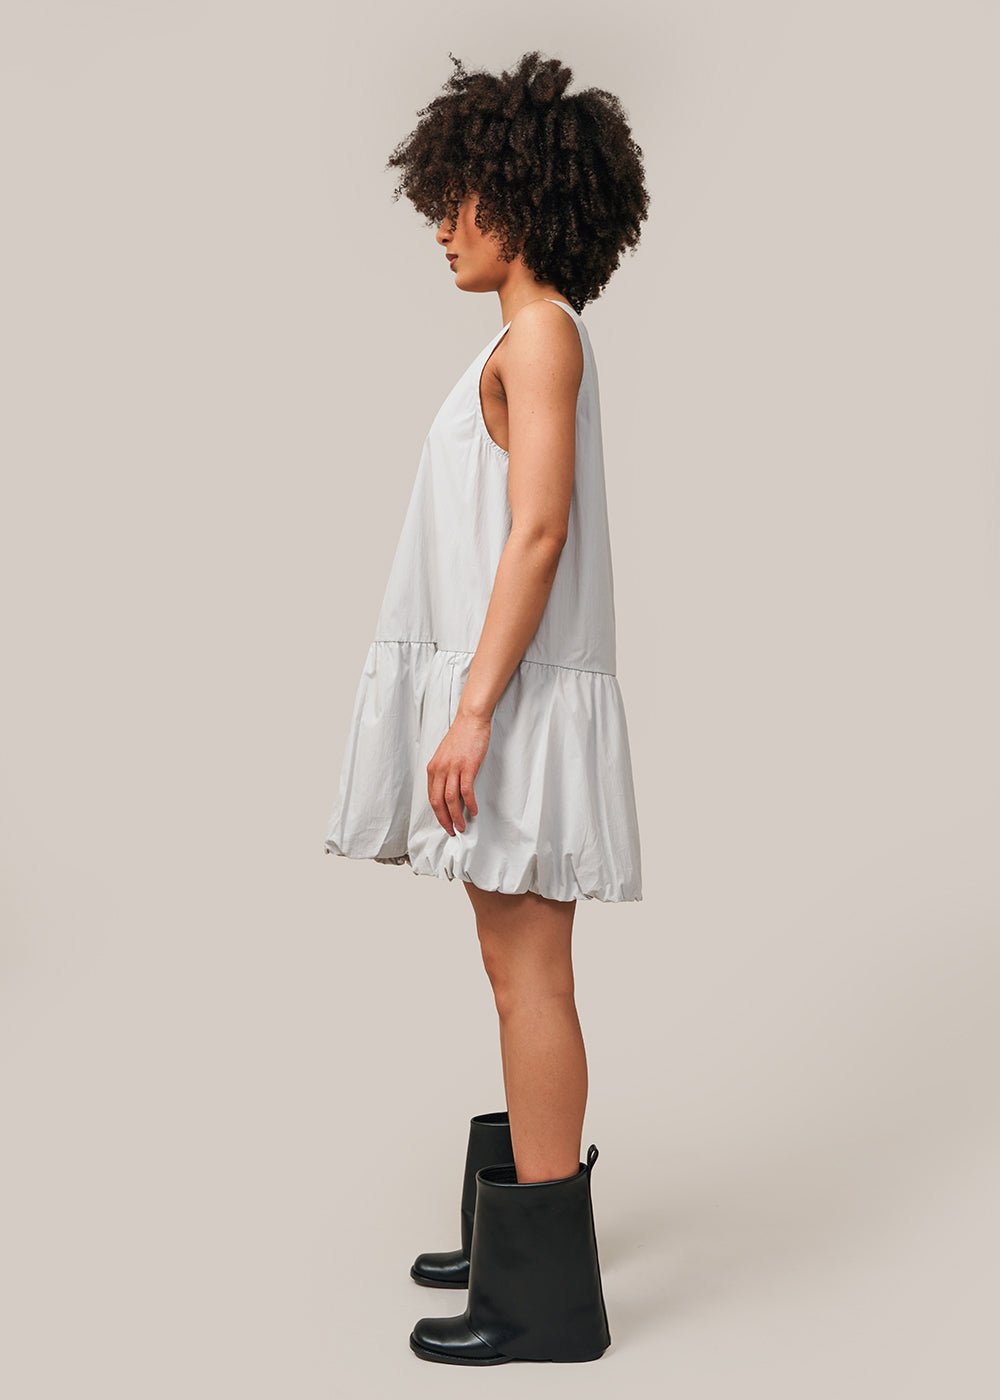 AMOMENTO Light Gray Volume Mini Dress - New Classics Studios Sustainable Ethical Fashion Canada